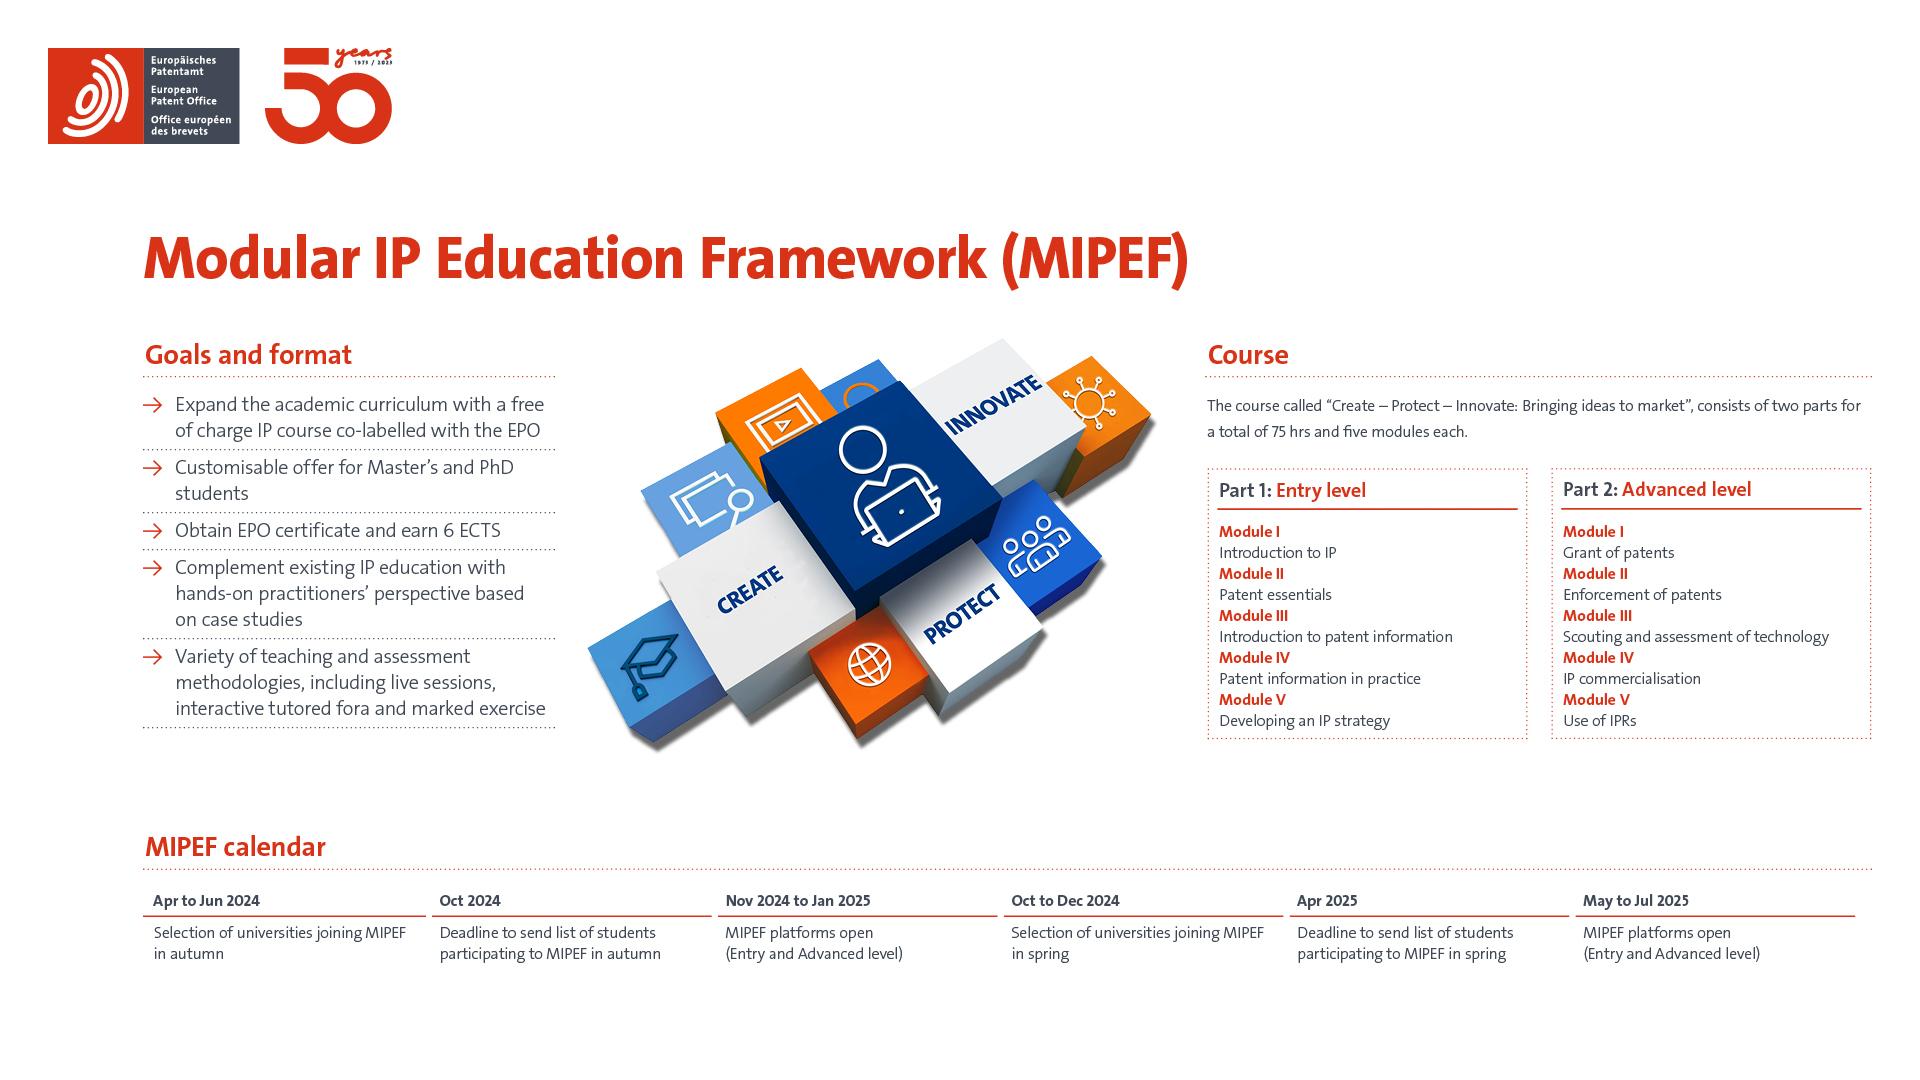 Infographic on "Modular IP Education Framework (MIPEF)"